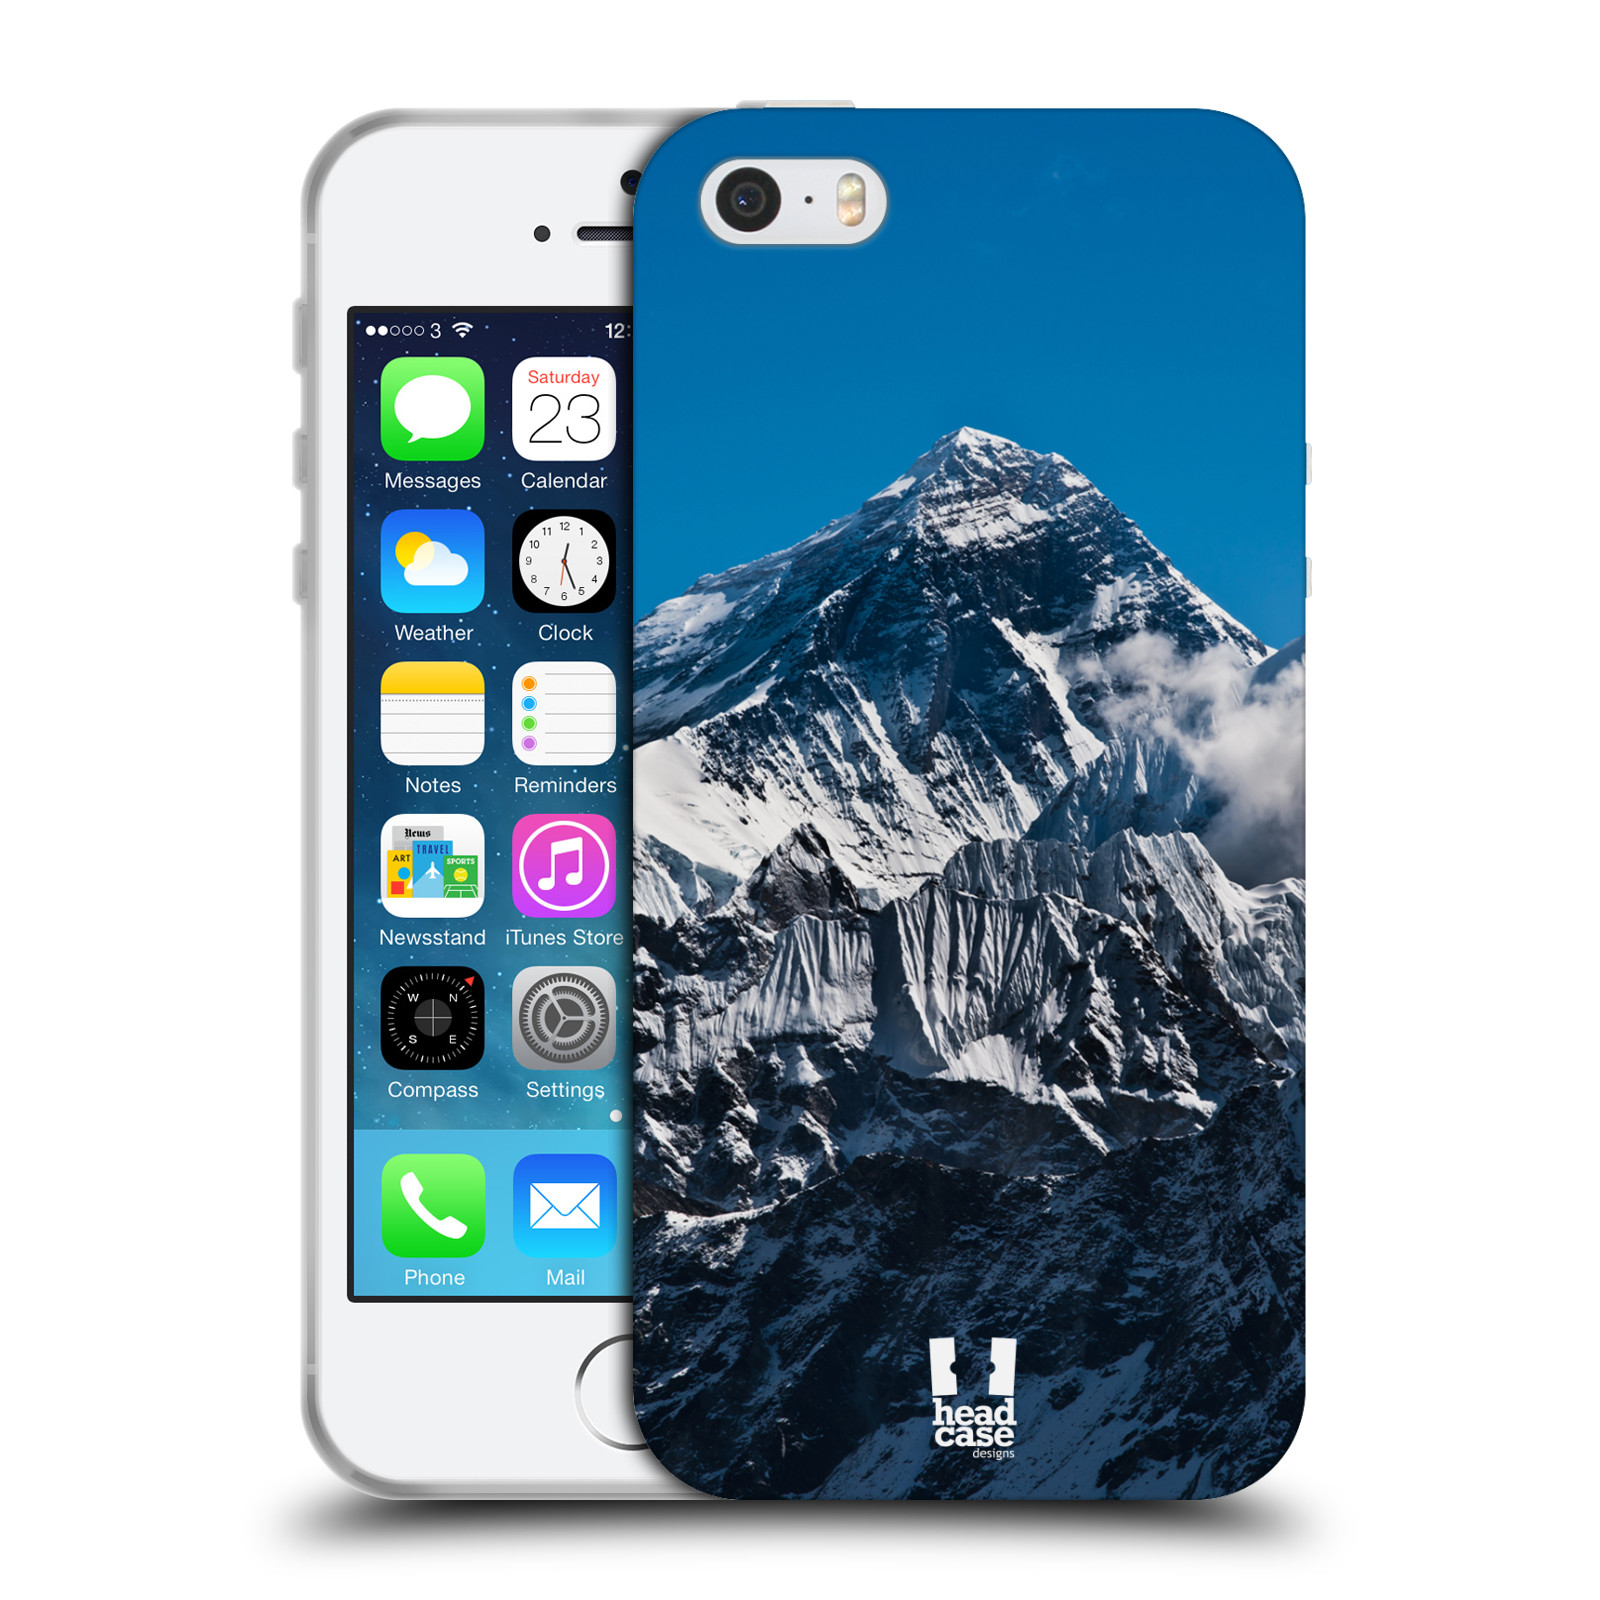 Silikonové pouzdro na mobil Apple iPhone 5, 5S, SE - Head Case - Mount Everest Peak (Silikonový kryt, obal, pouzdro na mobilní telefon Apple iPhone SE, 5S a 5 s motivem Mount Everest Peak )